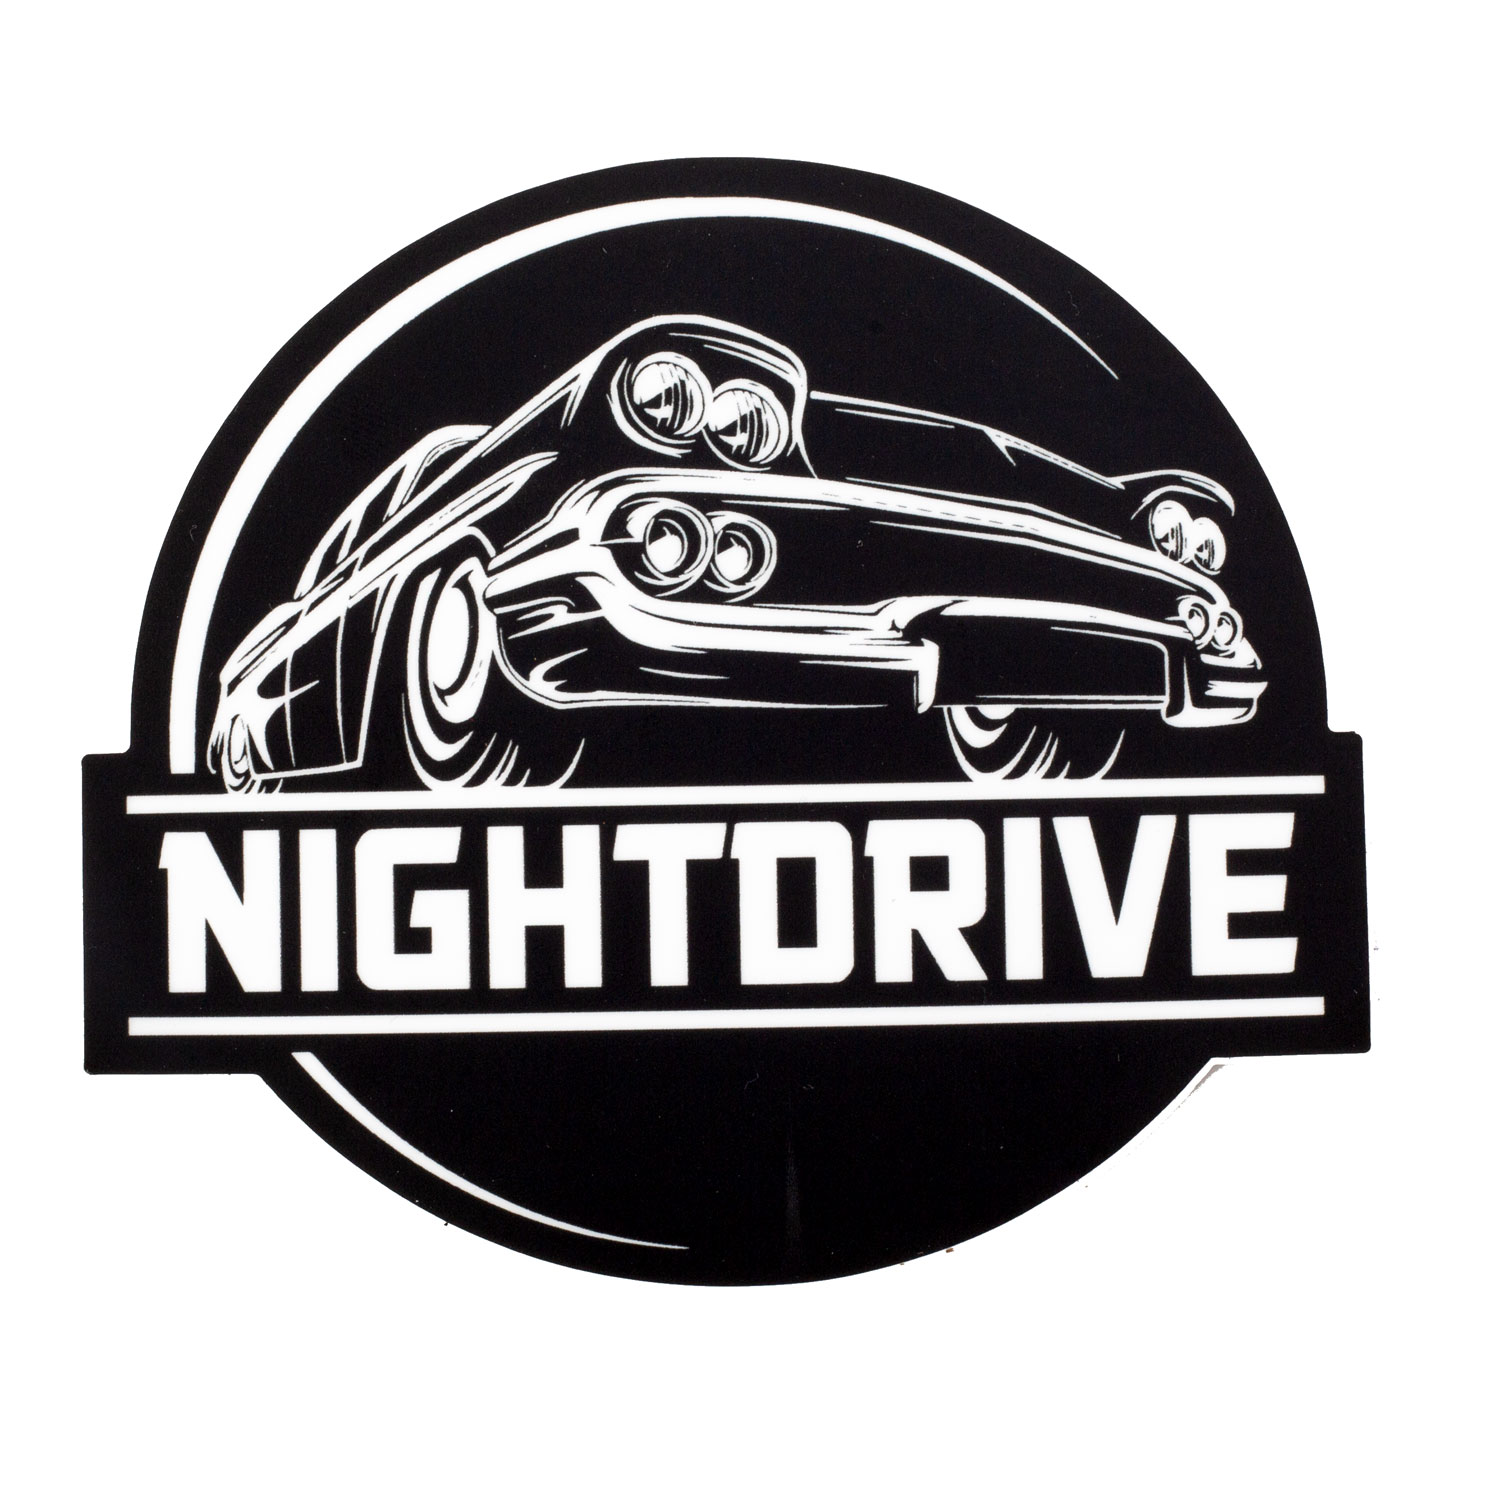 NIGHTDRIVE B&W AUTO STICKER - Pro Sport Stickers